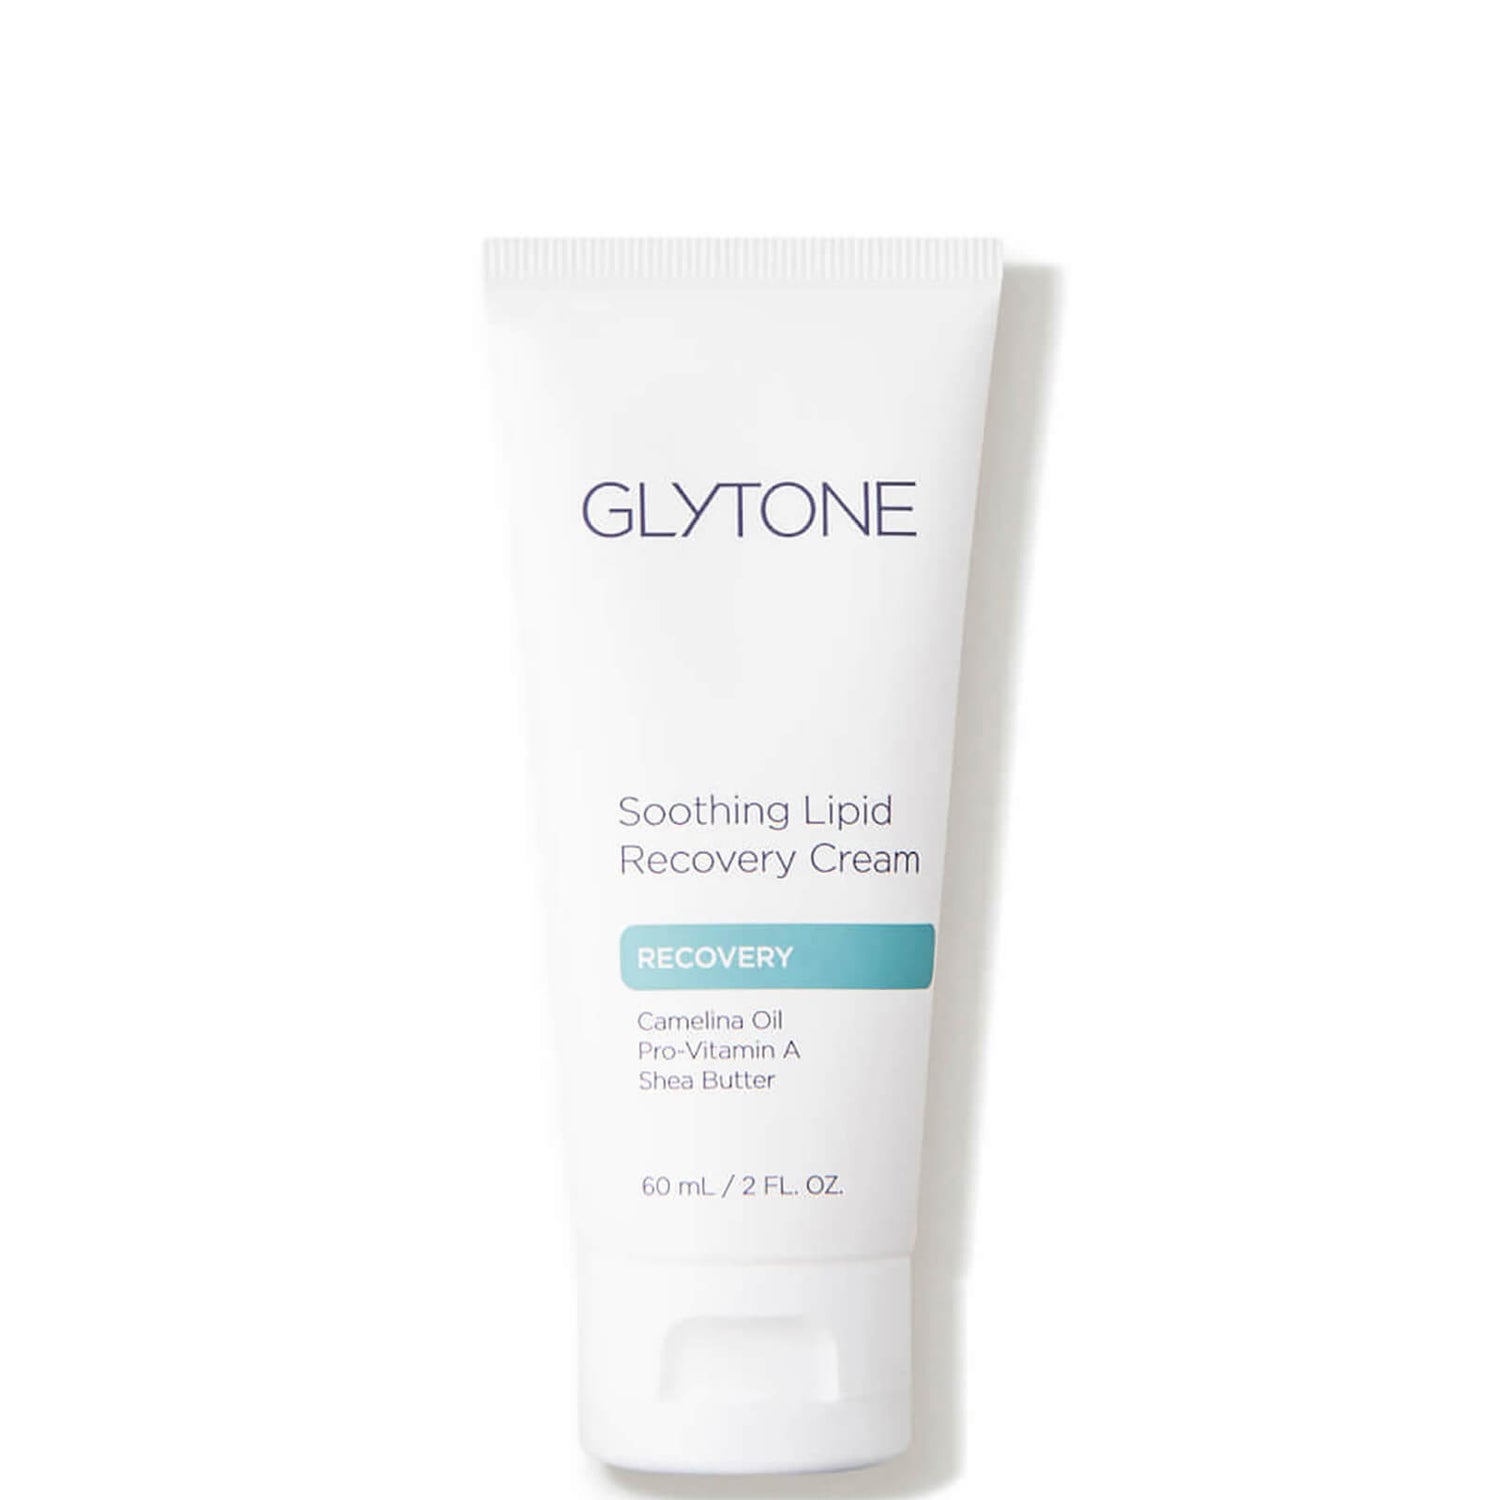 Glytone Soothing Lipid Recovery Cream (2 fl. oz.)